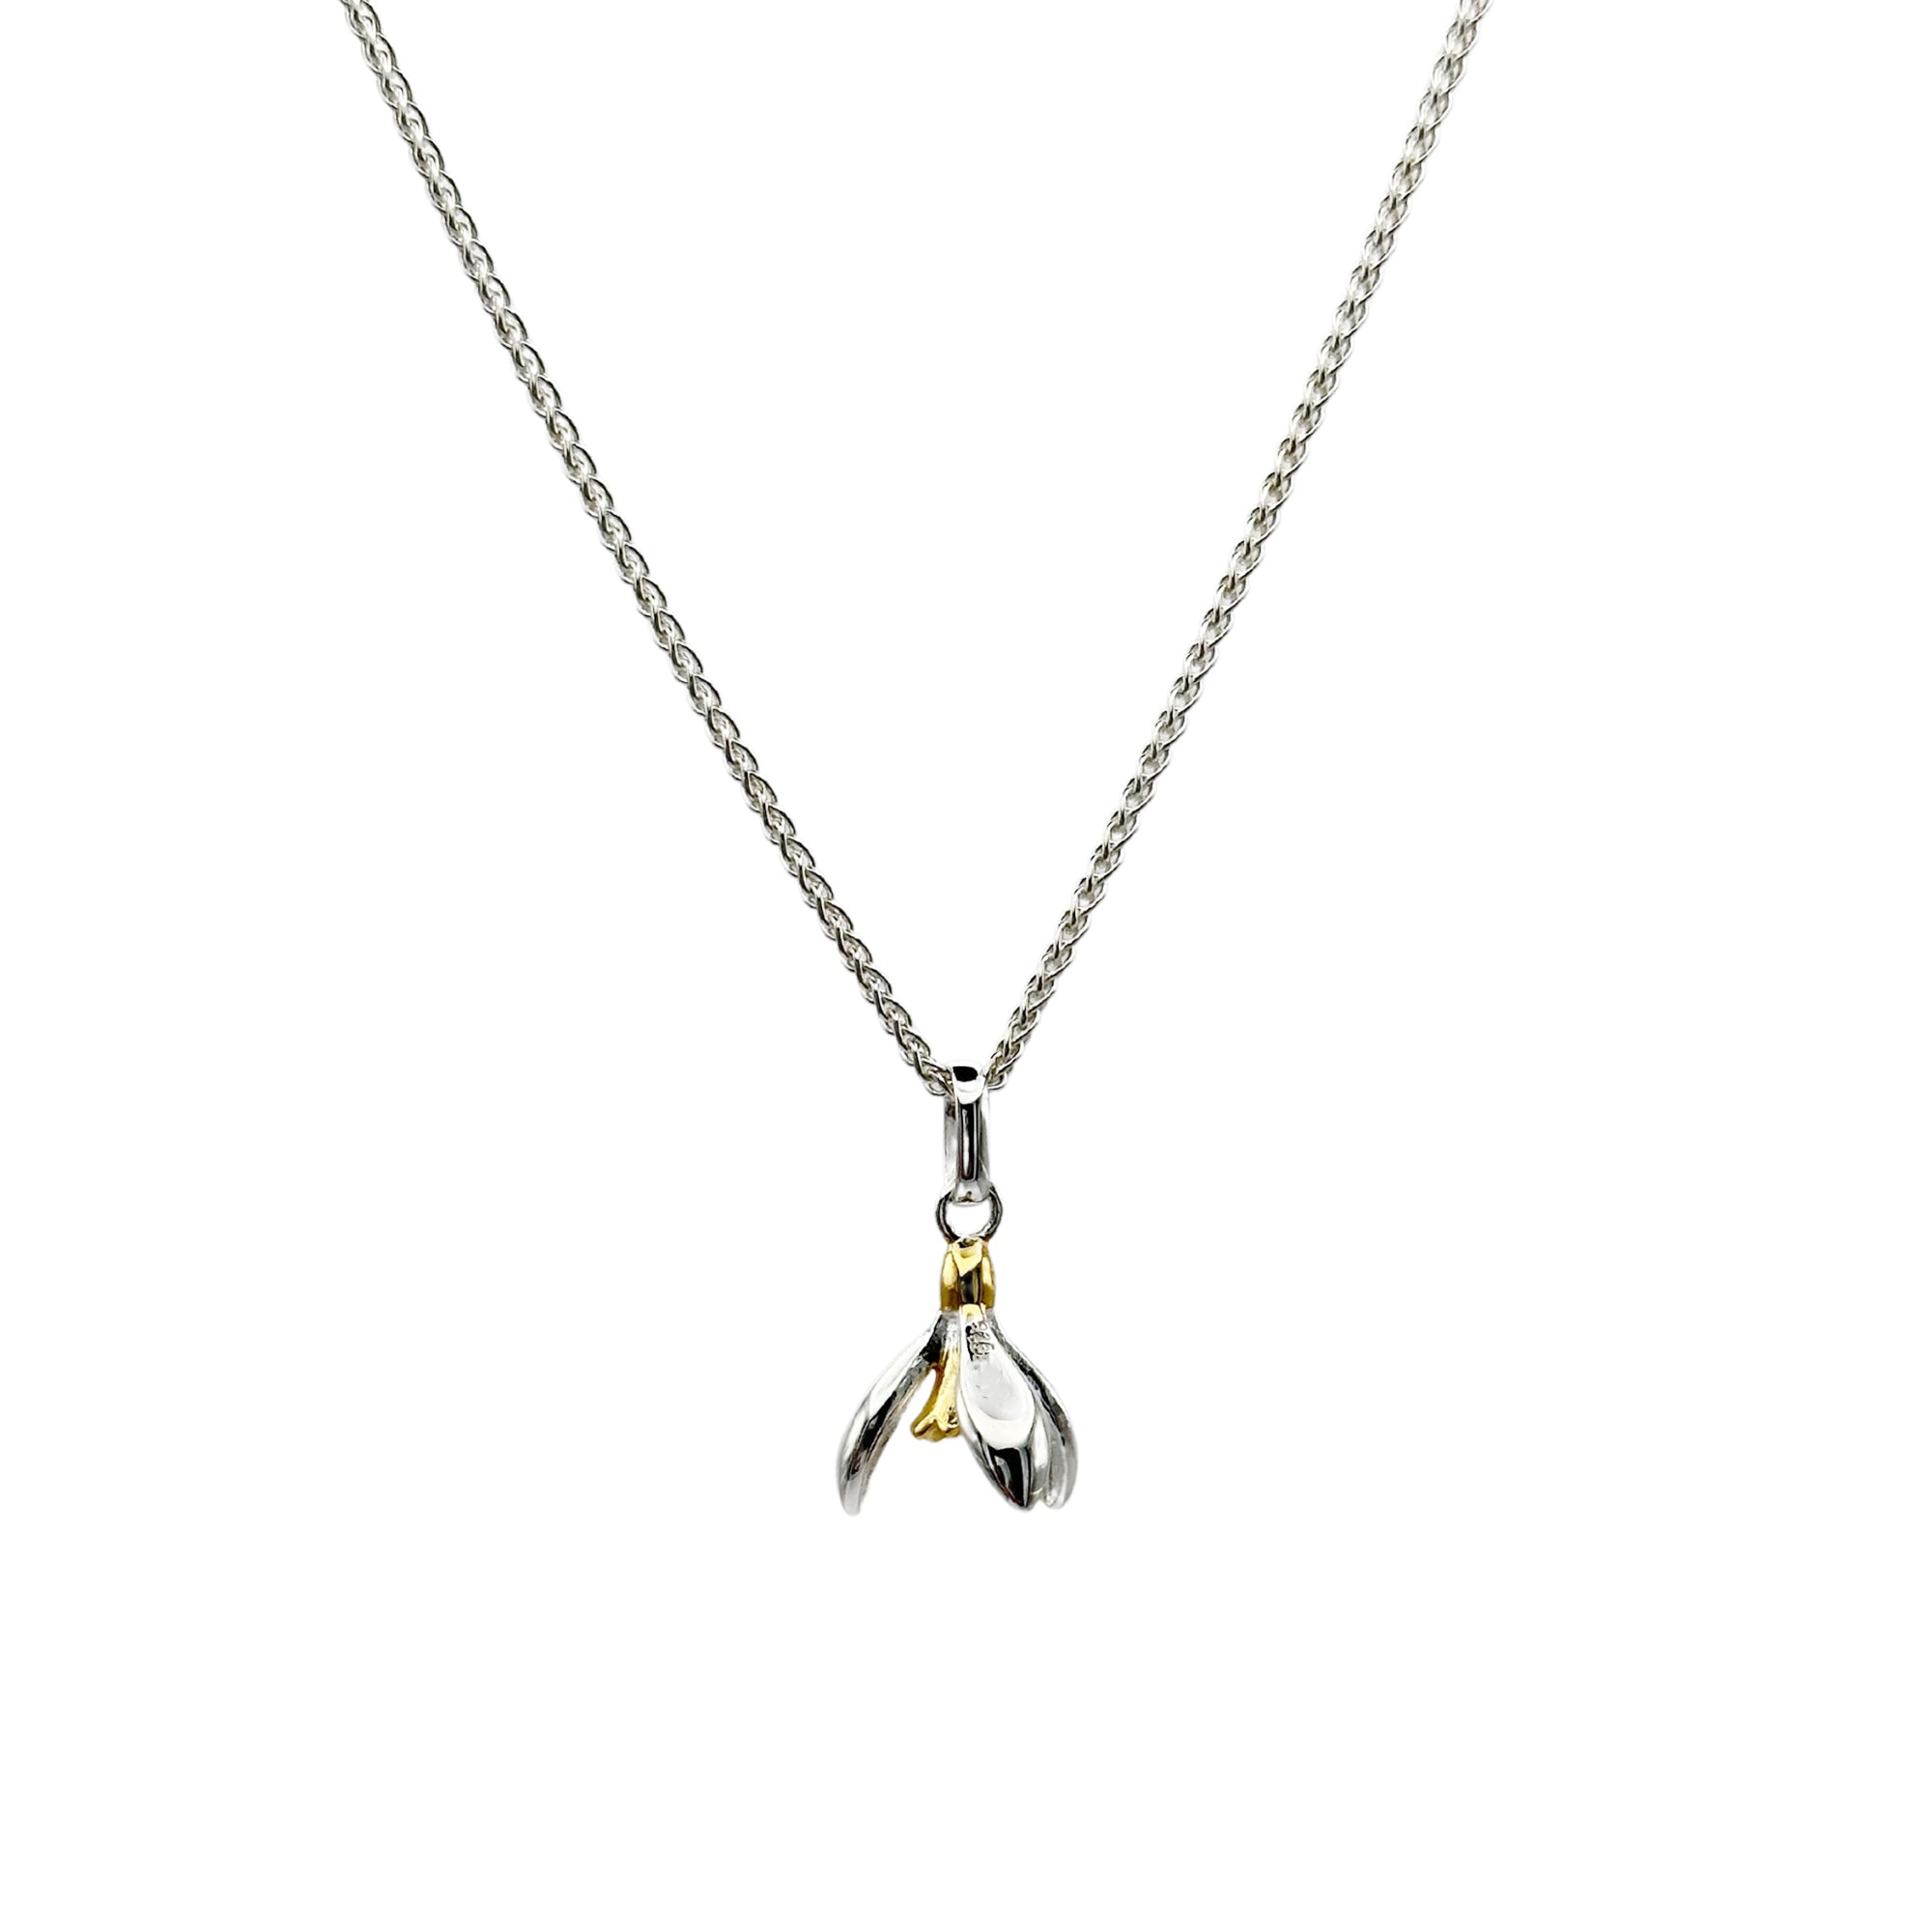 silver & gold snowdrop necklace pendant